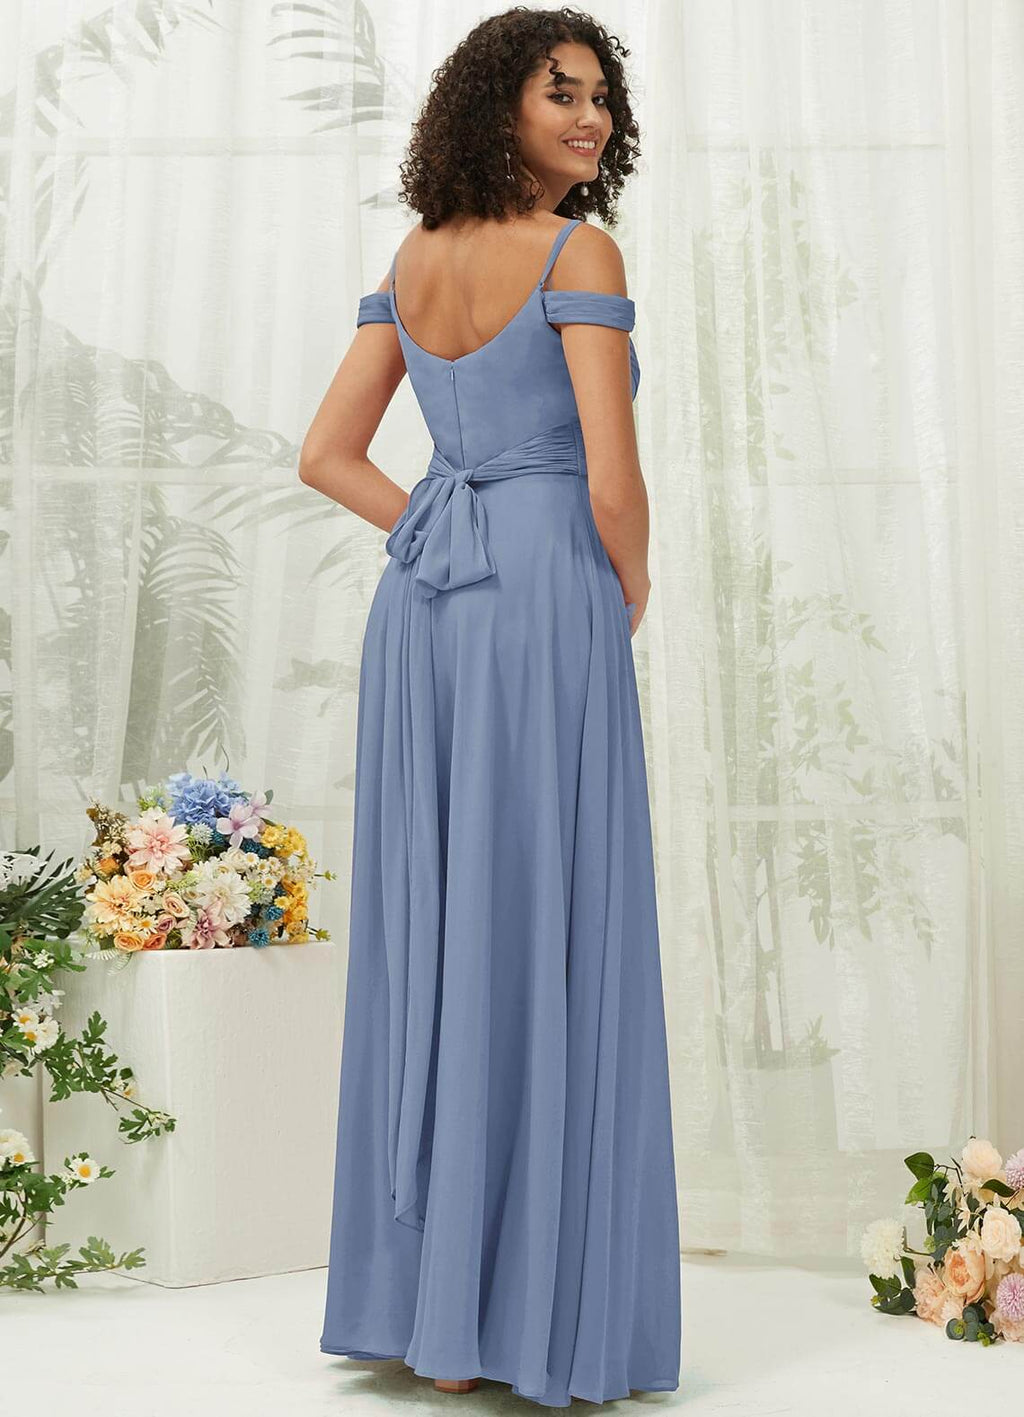 NZ Bridal Slate Blue Convertible Chiffon A Line Maxi Bridesmaid Dress with Pocket TC30219 Celia a